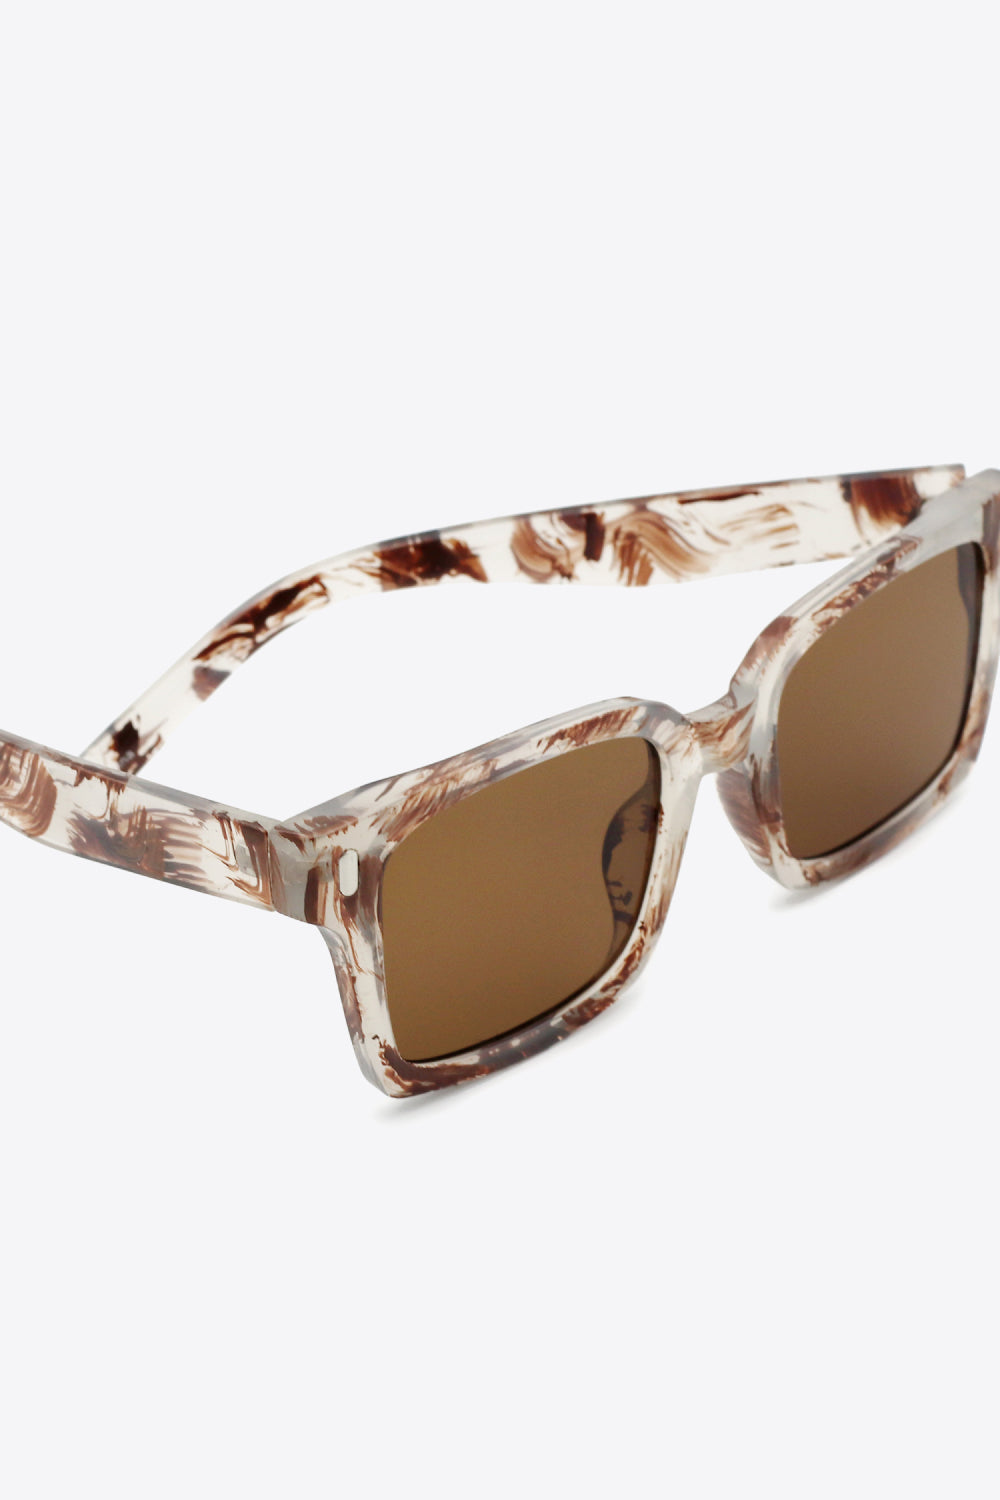 UV400 Polycarbonate Square Sunglasses [ Click for more Options]